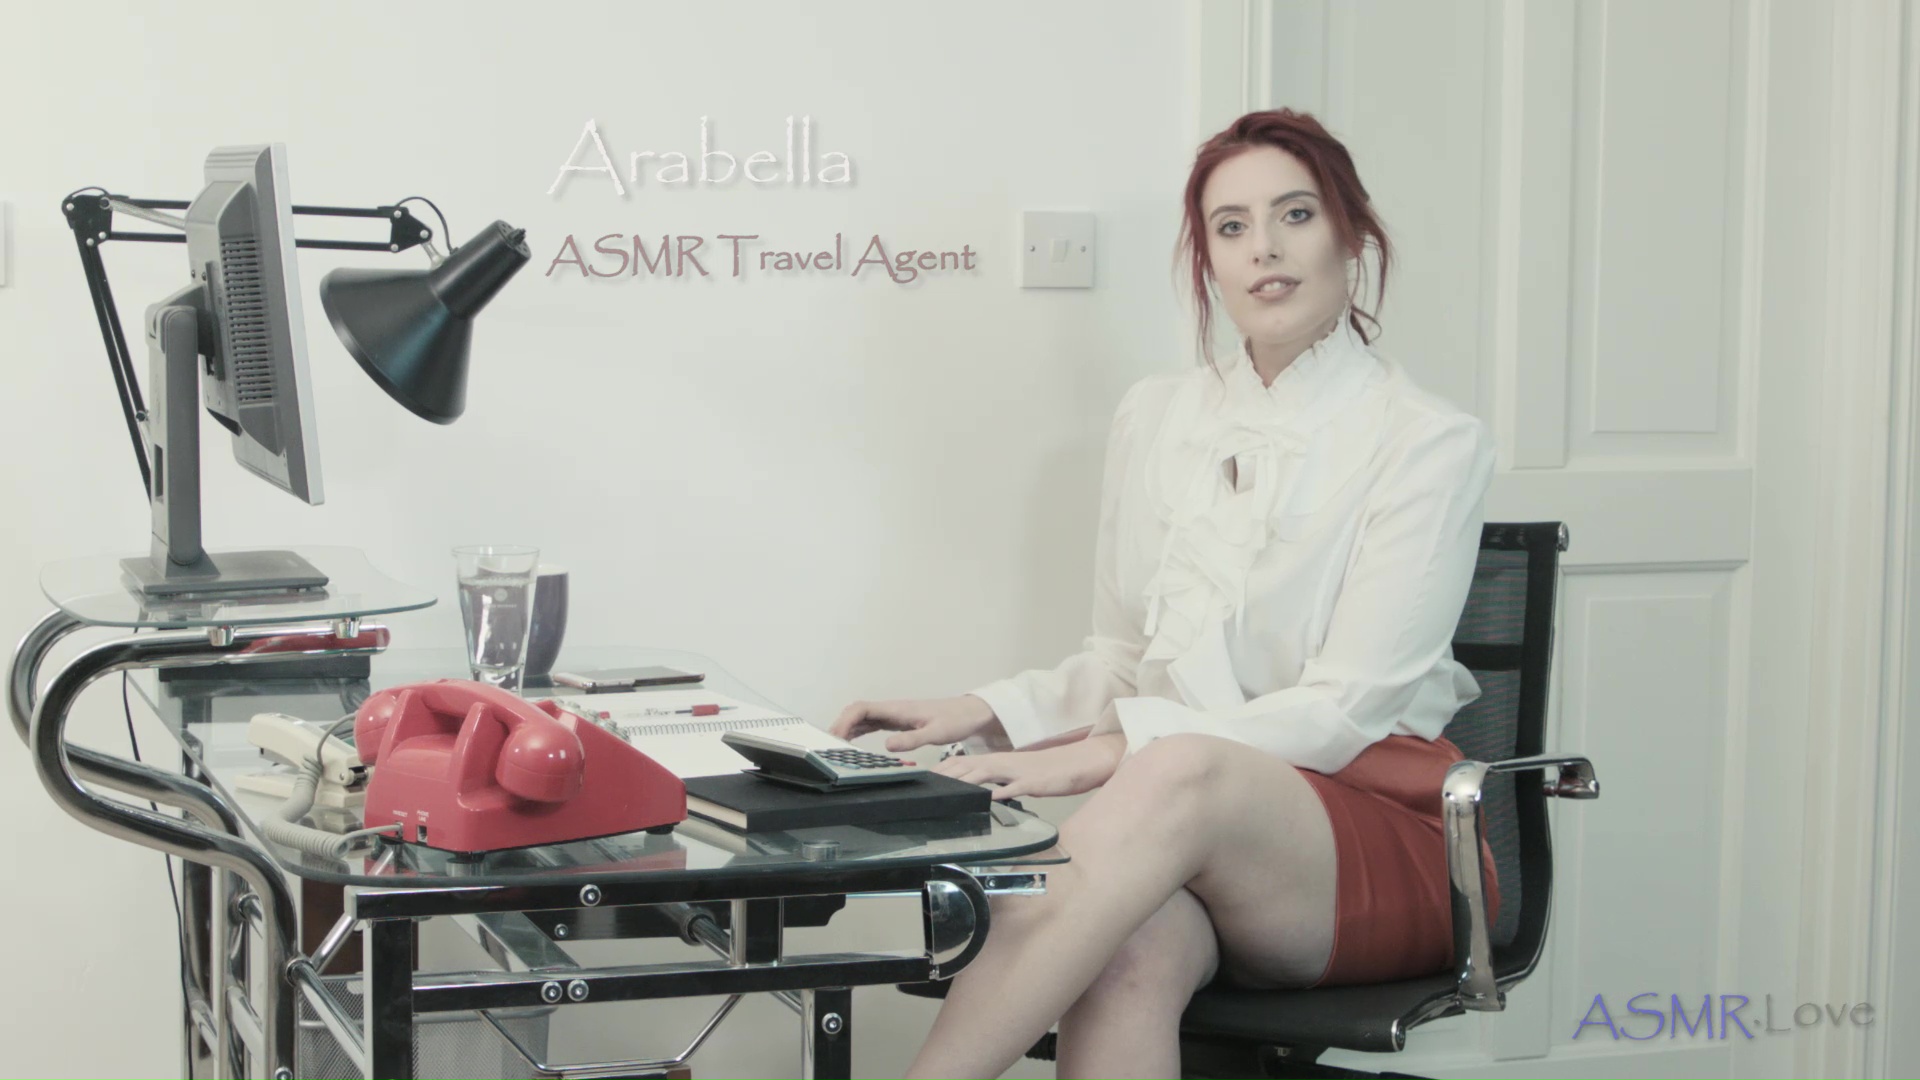 content/Arabella/Arabella Travel Agent/1.jpg